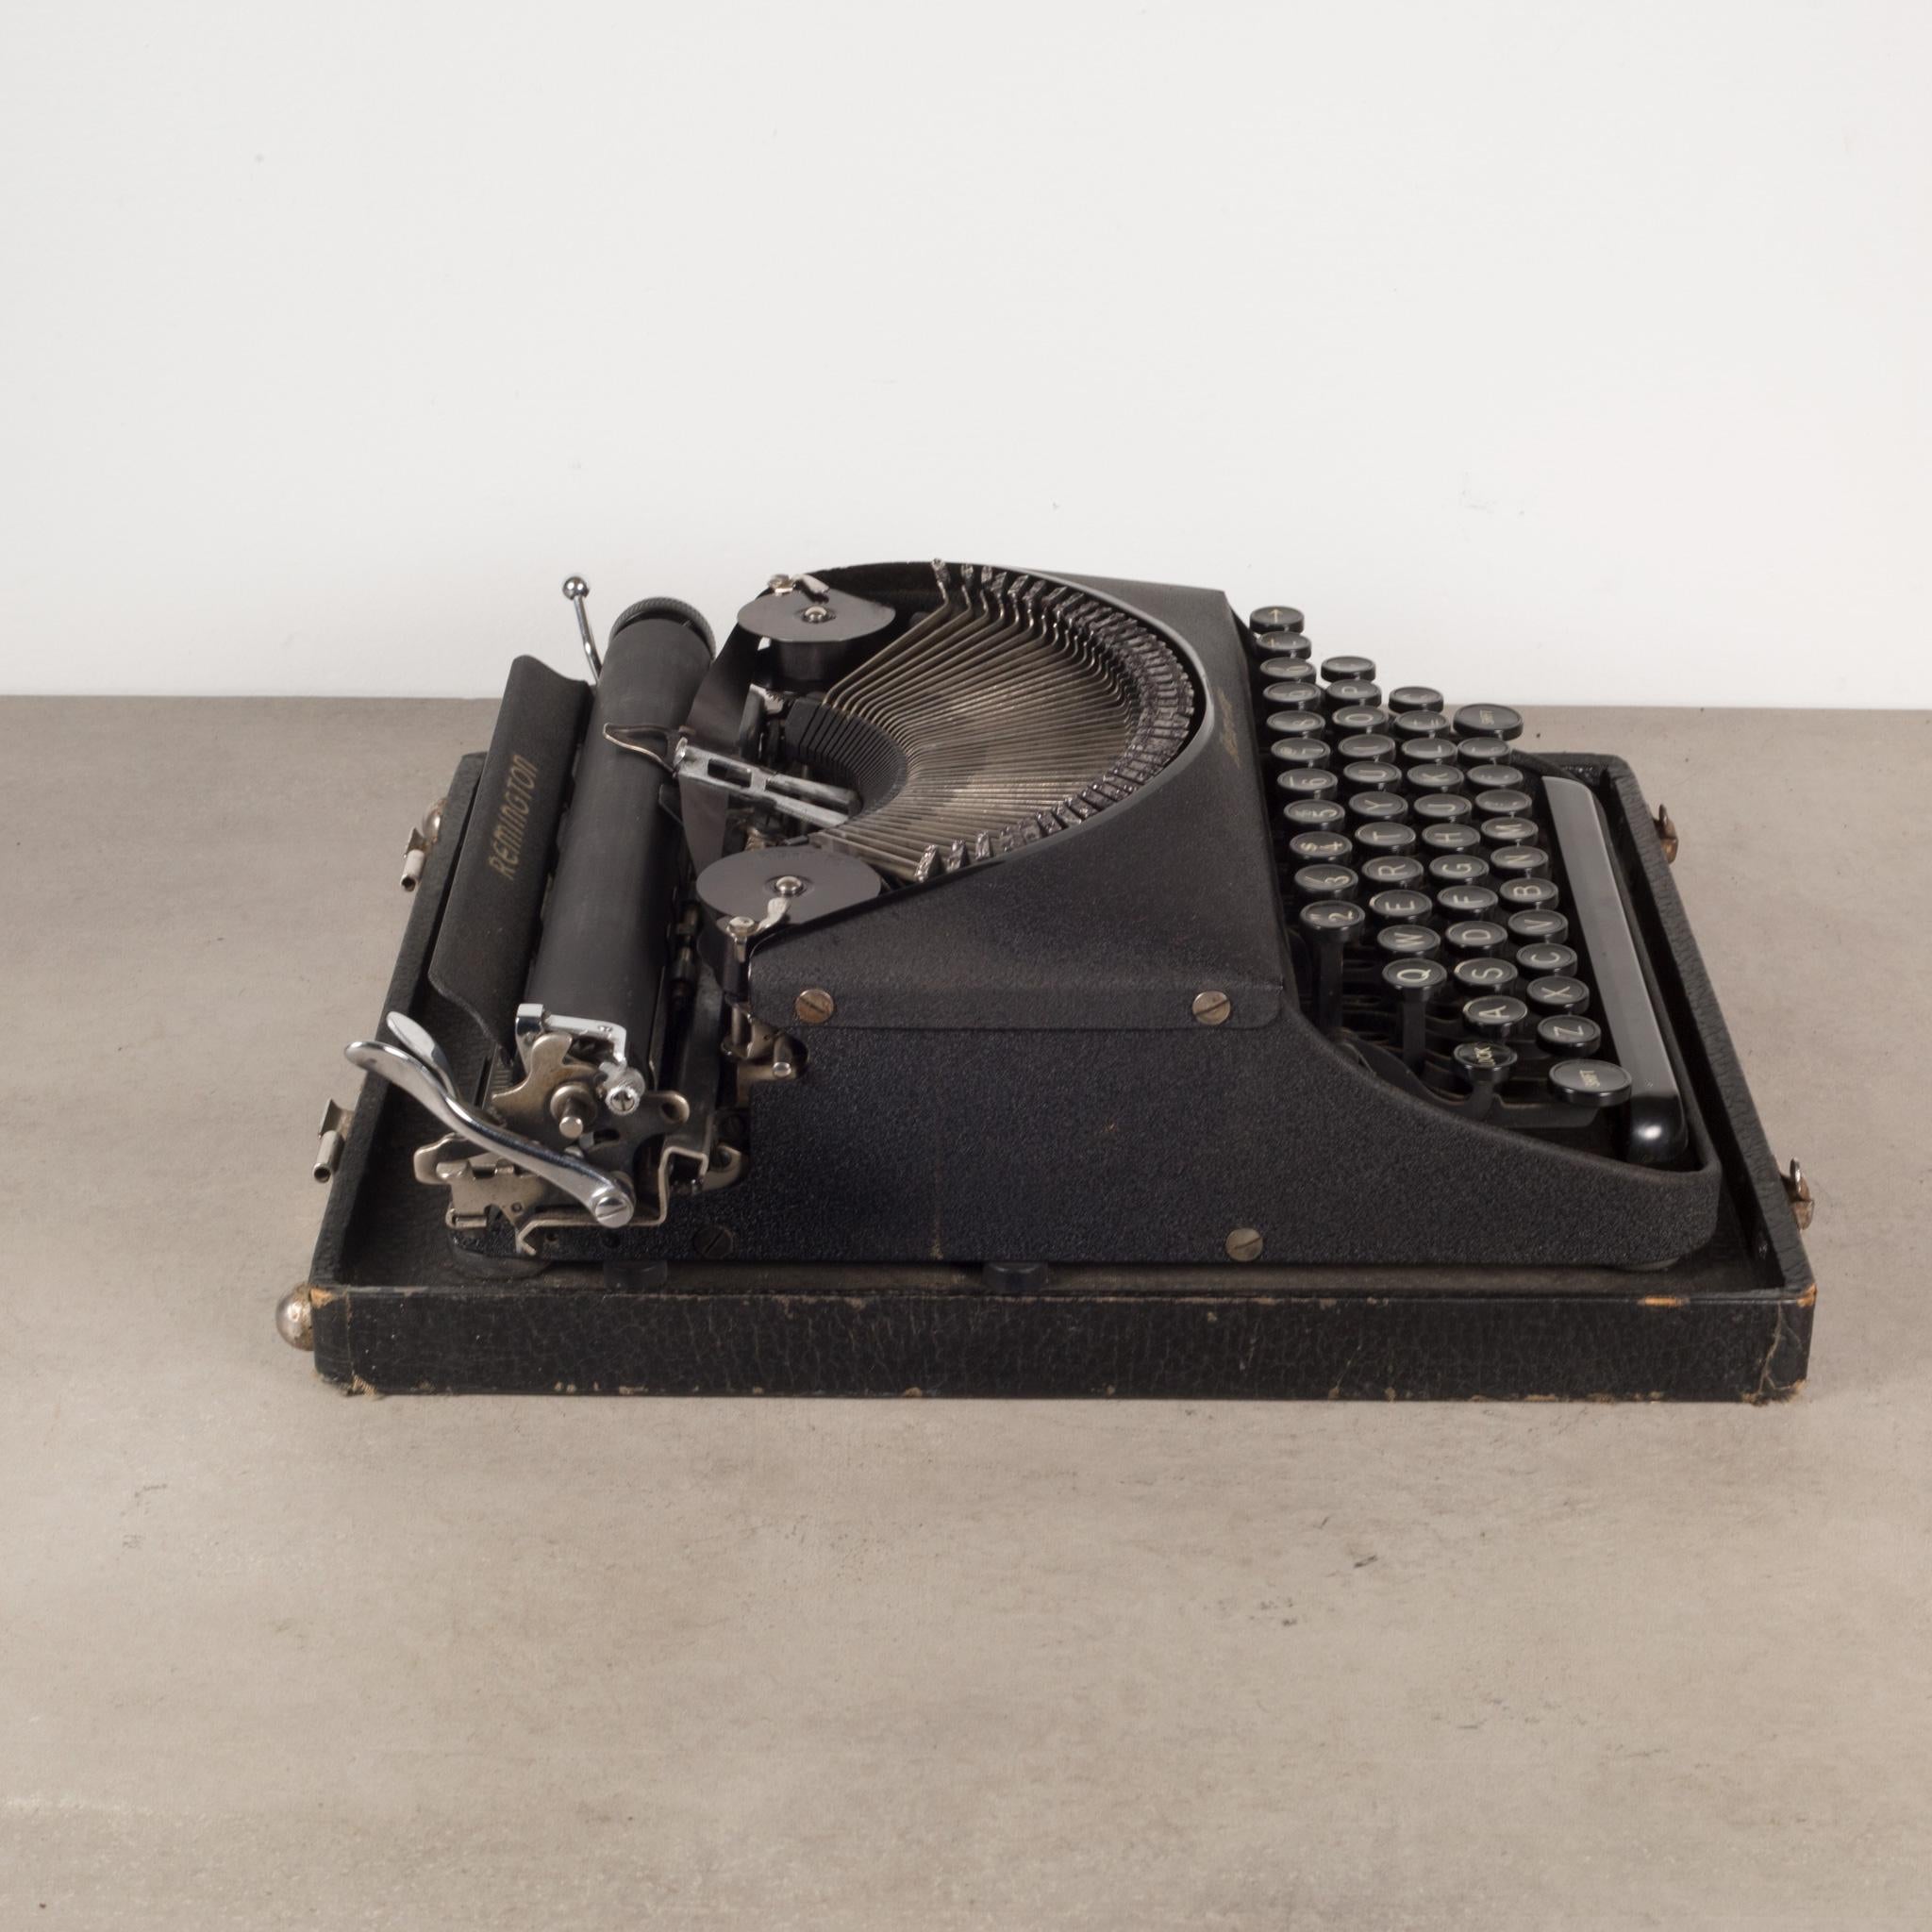 remington remette typewriter value